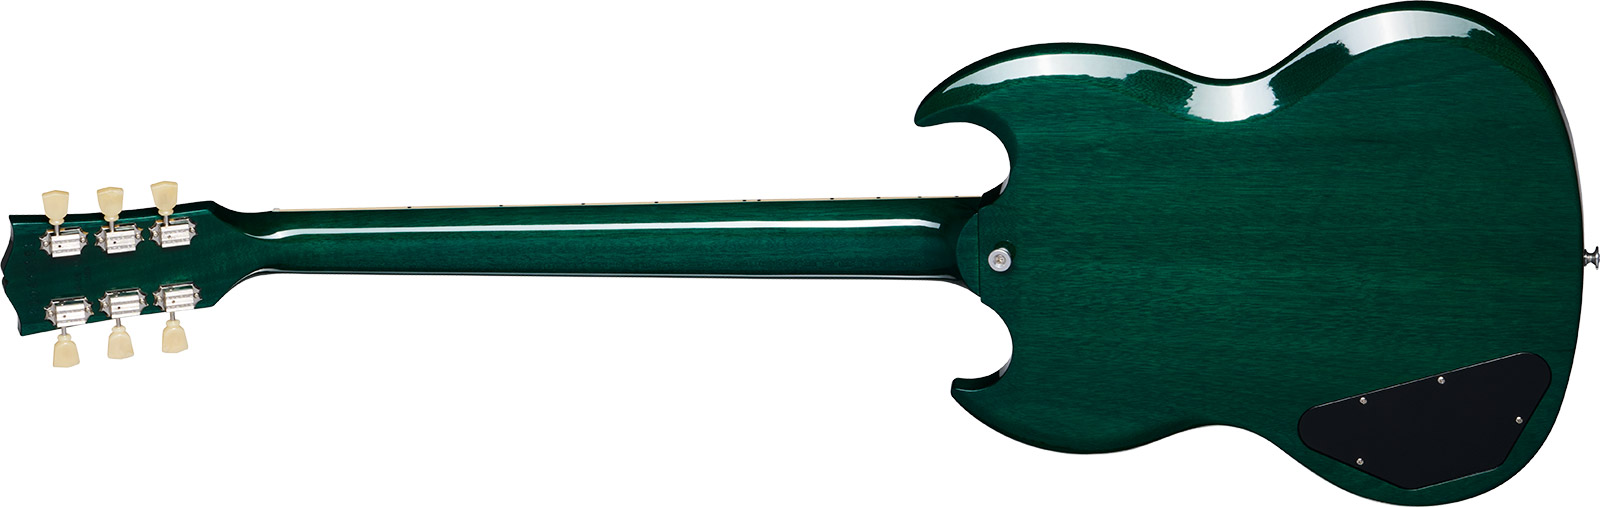 Gibson Sg Standard 1961 Custom Color 2h Ht Rw - Translucent Teal - Guitarra eléctrica de doble corte - Variation 1